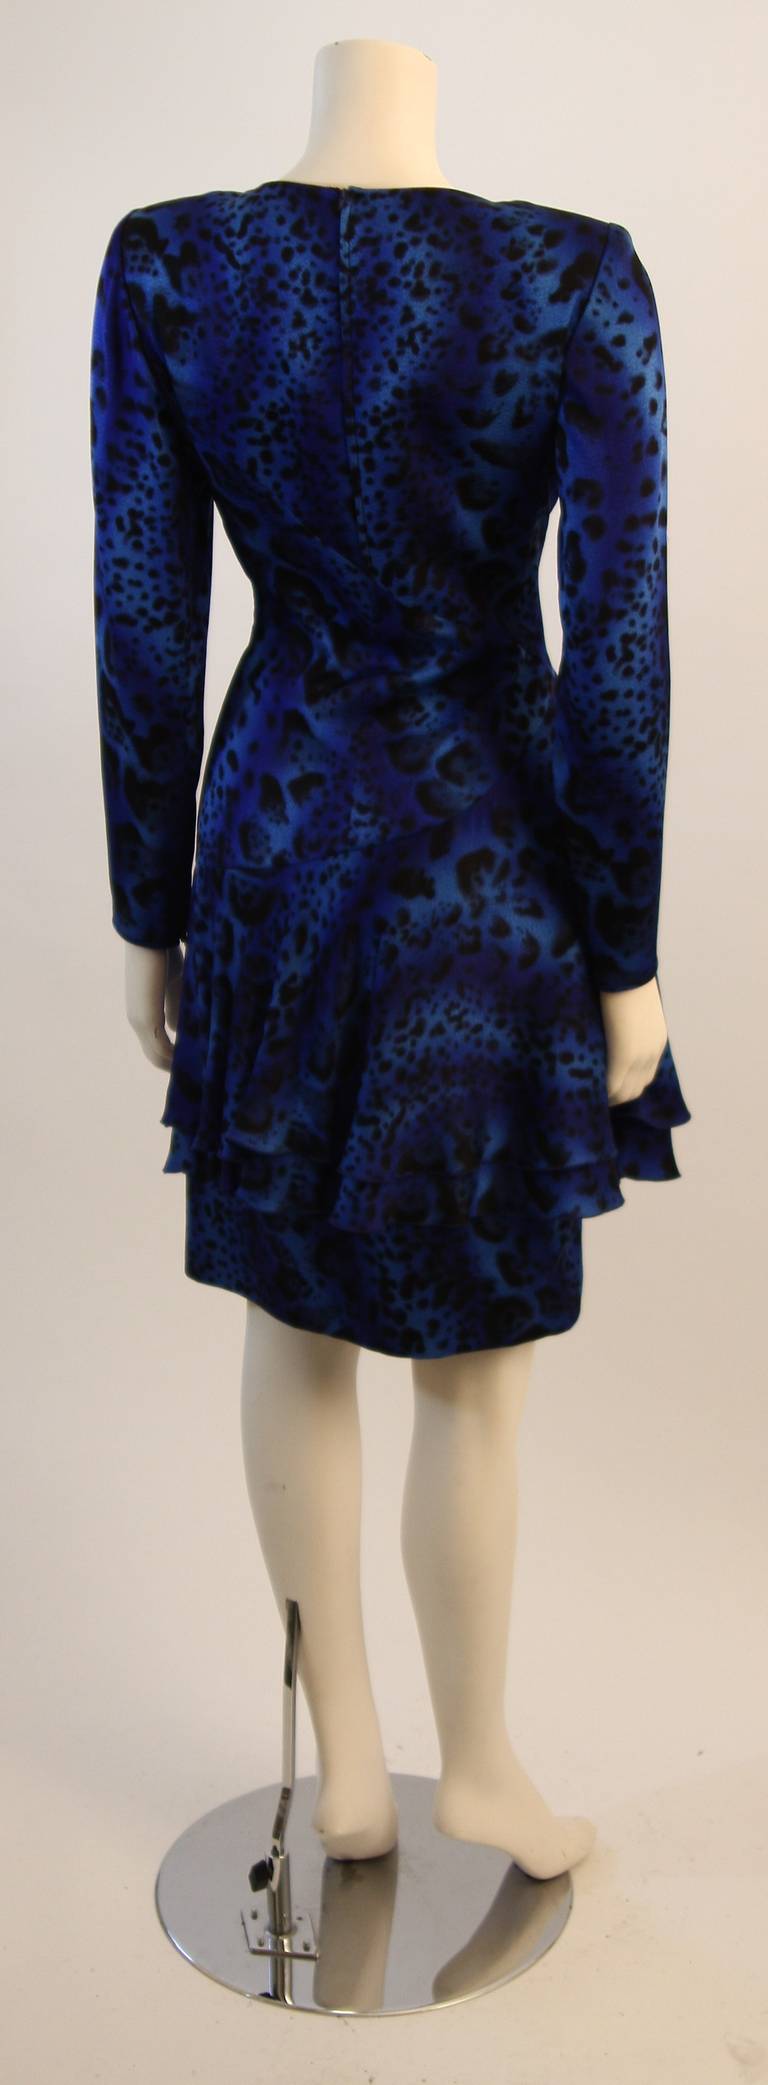 Emanuel Ungaro Rich Blue Abstract Animal Print Dress Size 8 4